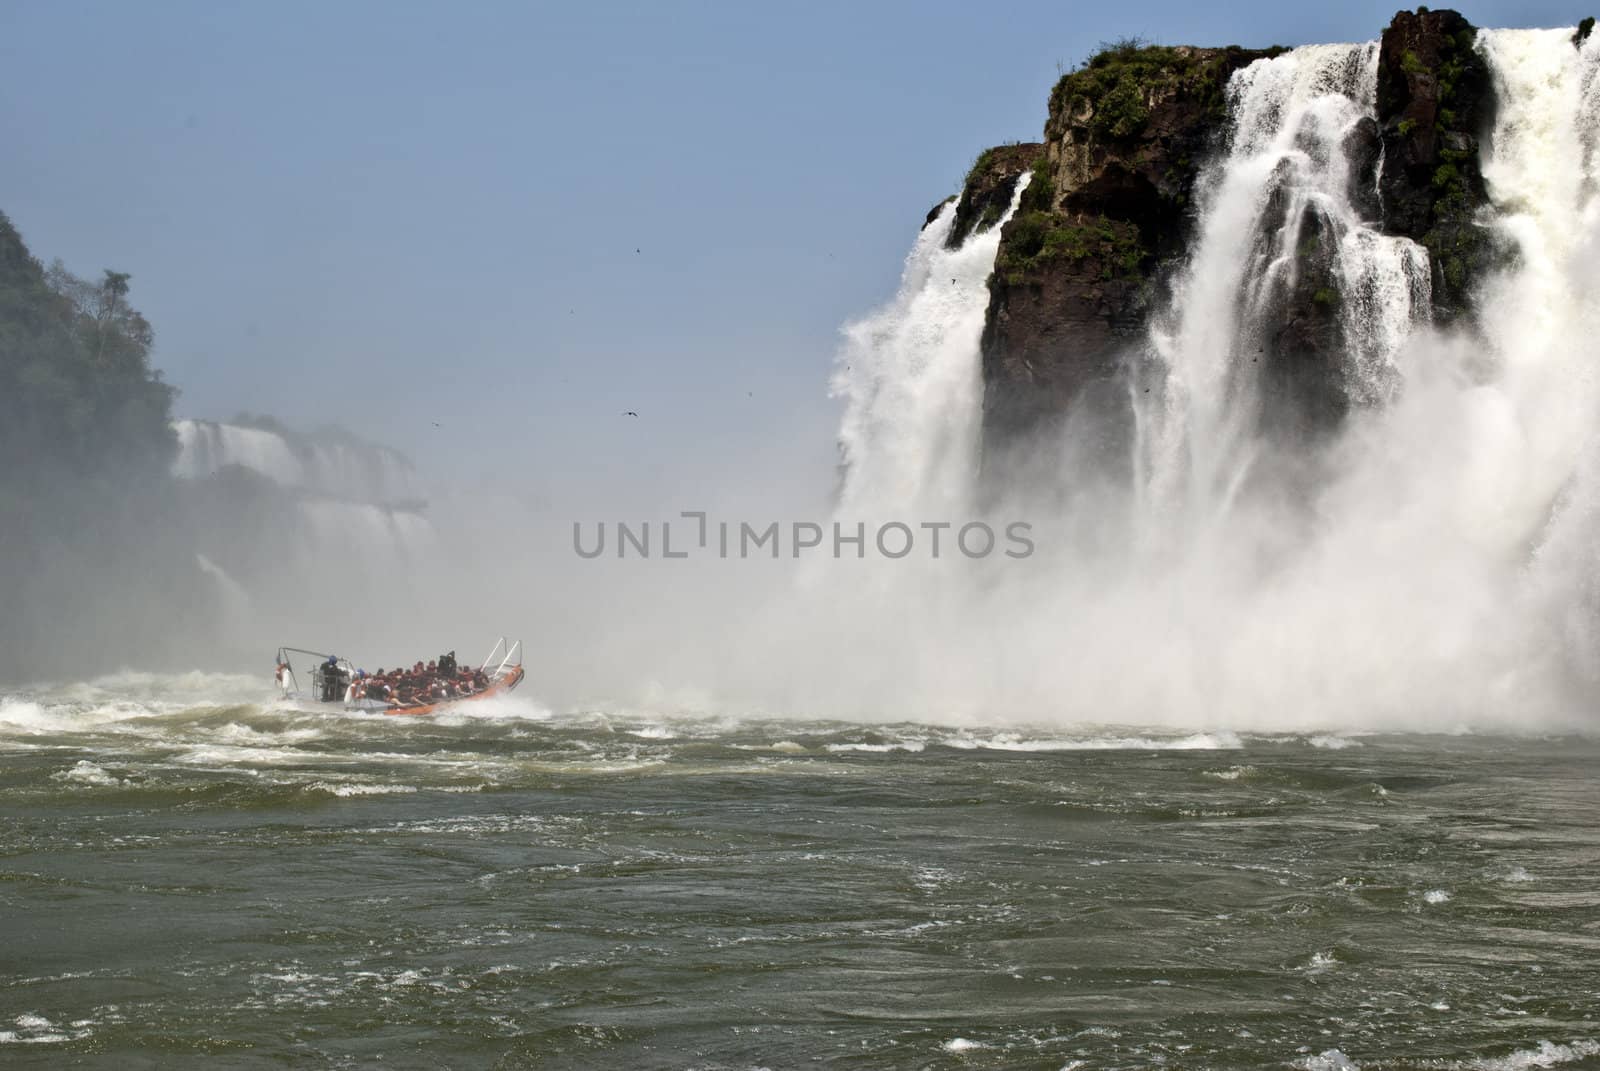 iguazu falls,argentina